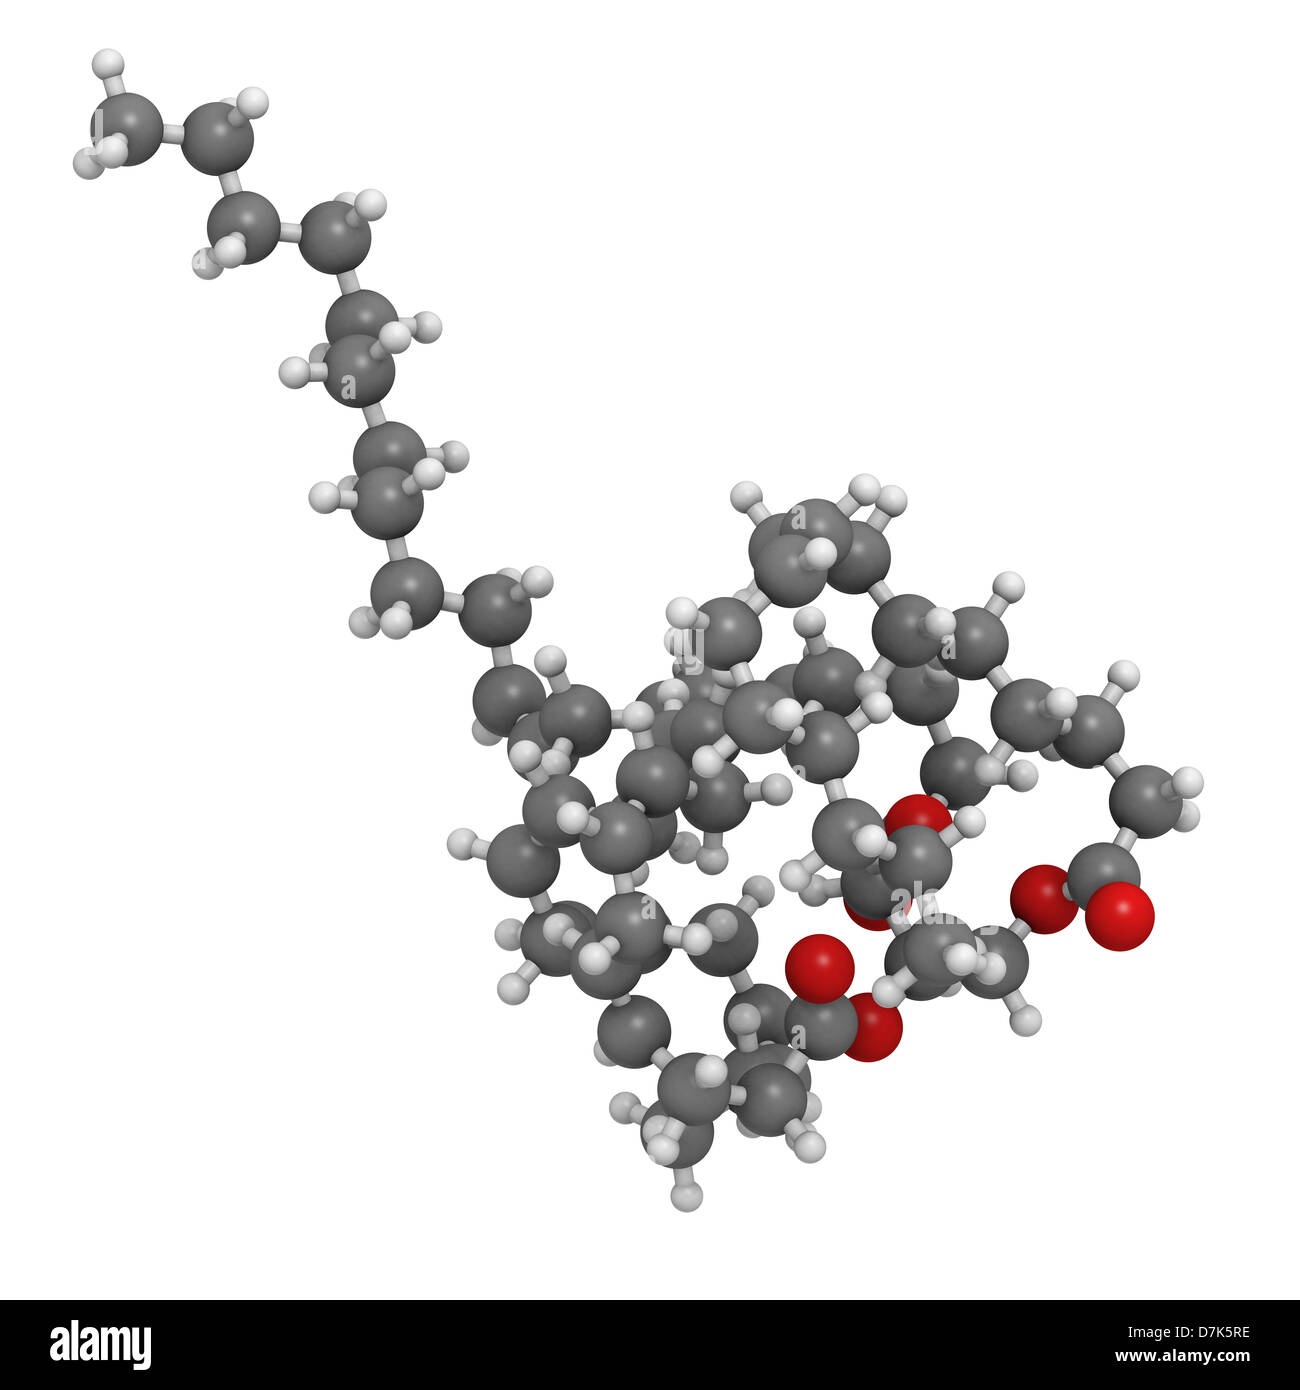 Fish oil triglyceride containing docosahexanoic acid (DHA), gadoleic acid and palmitoleic acid. Stock Photo